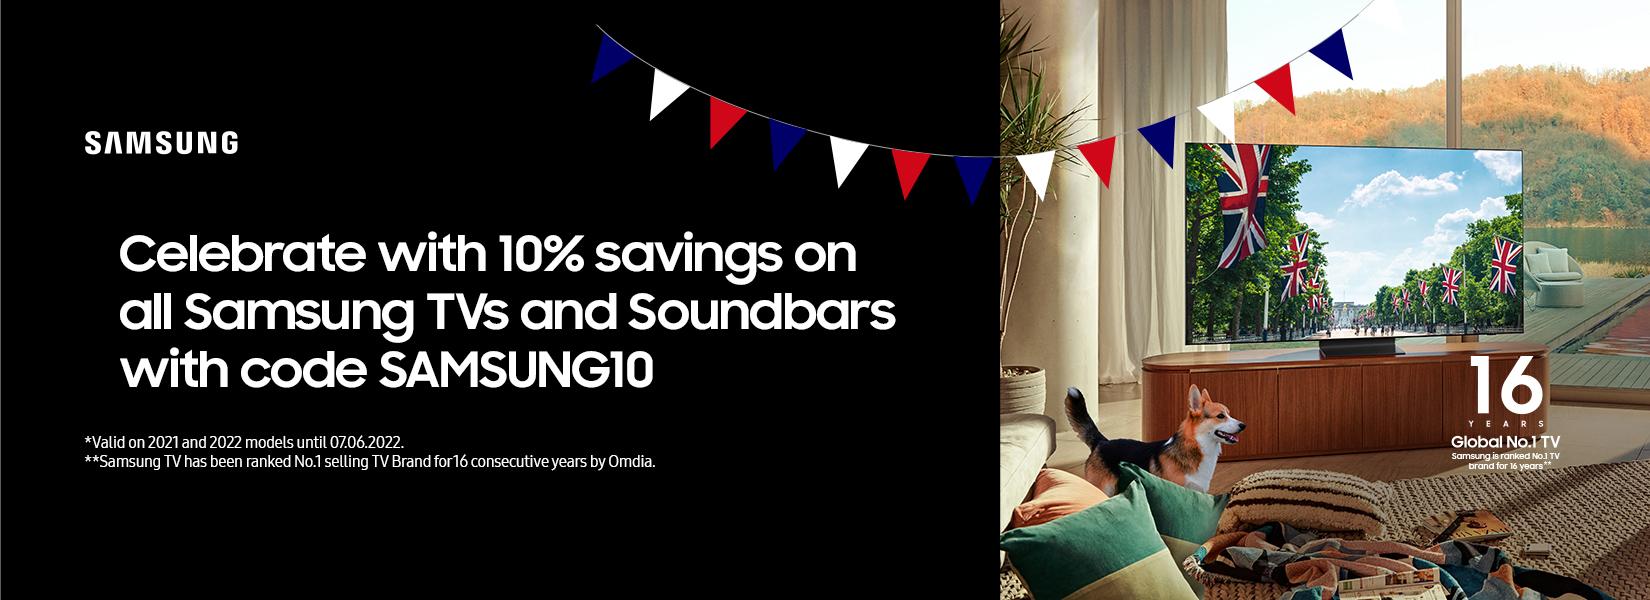 Samsung. Celebrate with 10% savings on all Samsung TVs and soundbars with code SAMSUNG10.